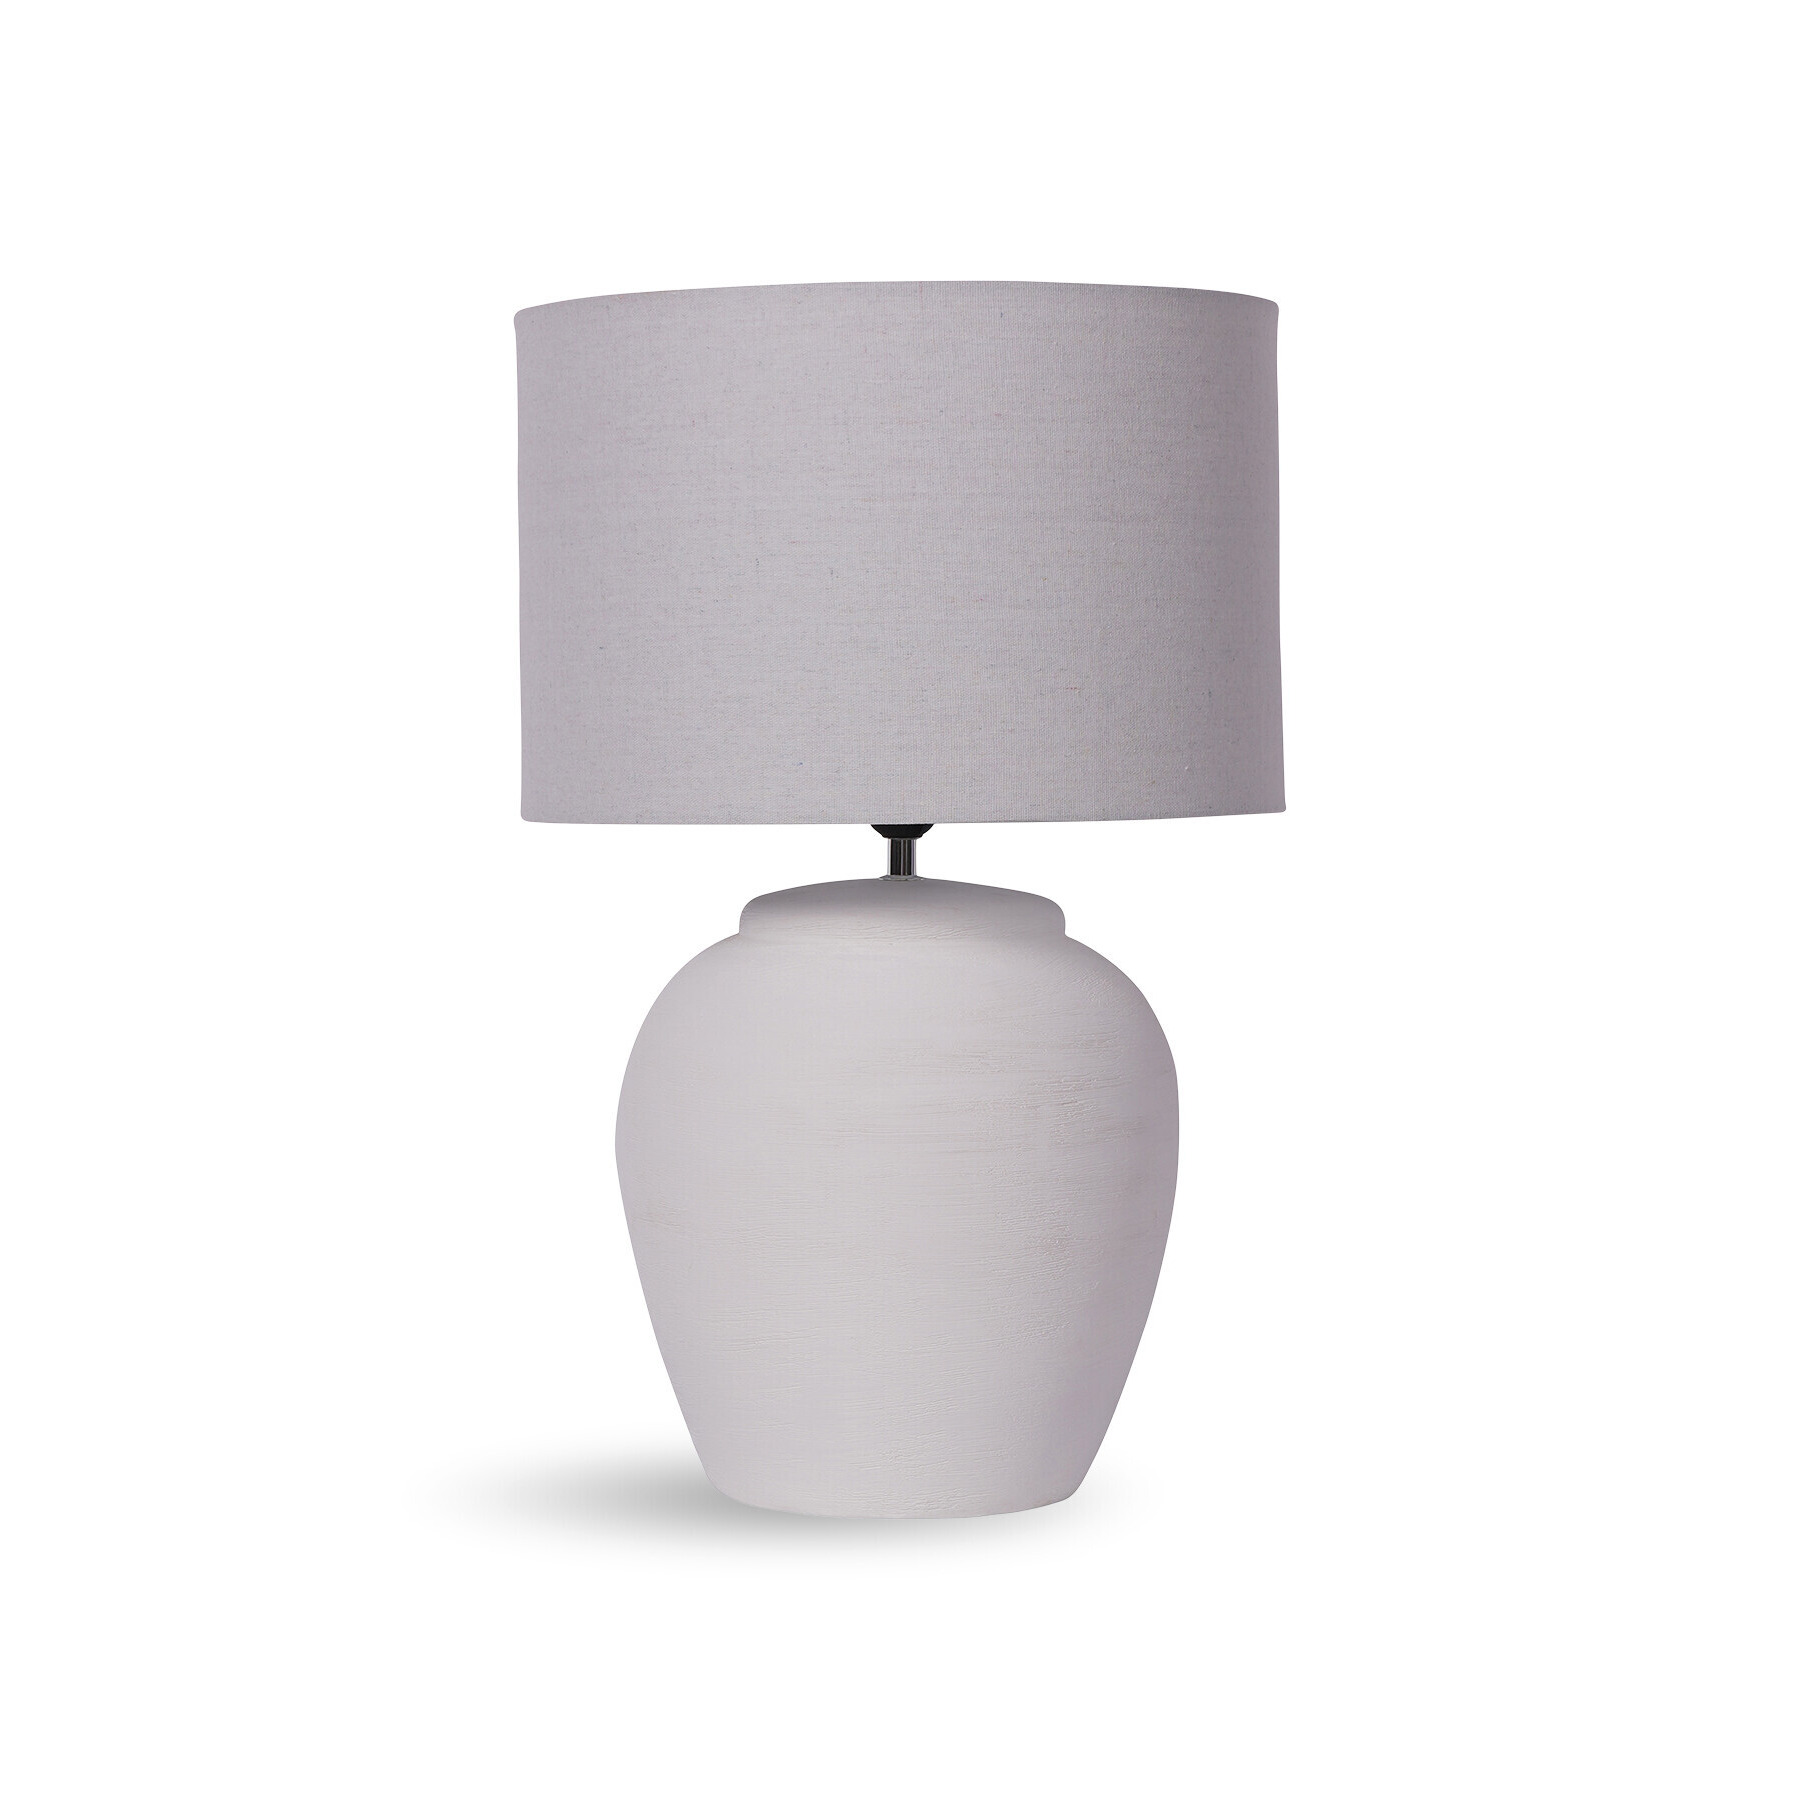 Libra Interiors Rhodes White Ceramic Lamp base with Shade, Large E27 LED GLS - Size 38x57x38cm - image 1